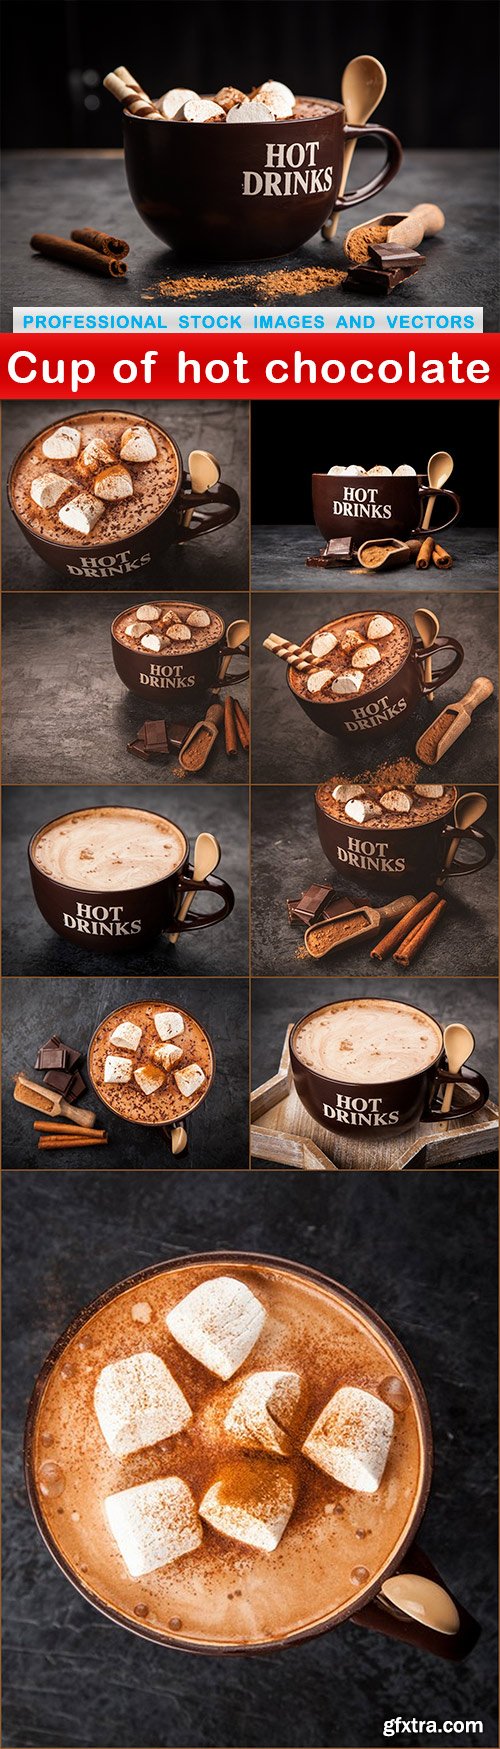 Cup of hot chocolate - 10 UHQ JPEG